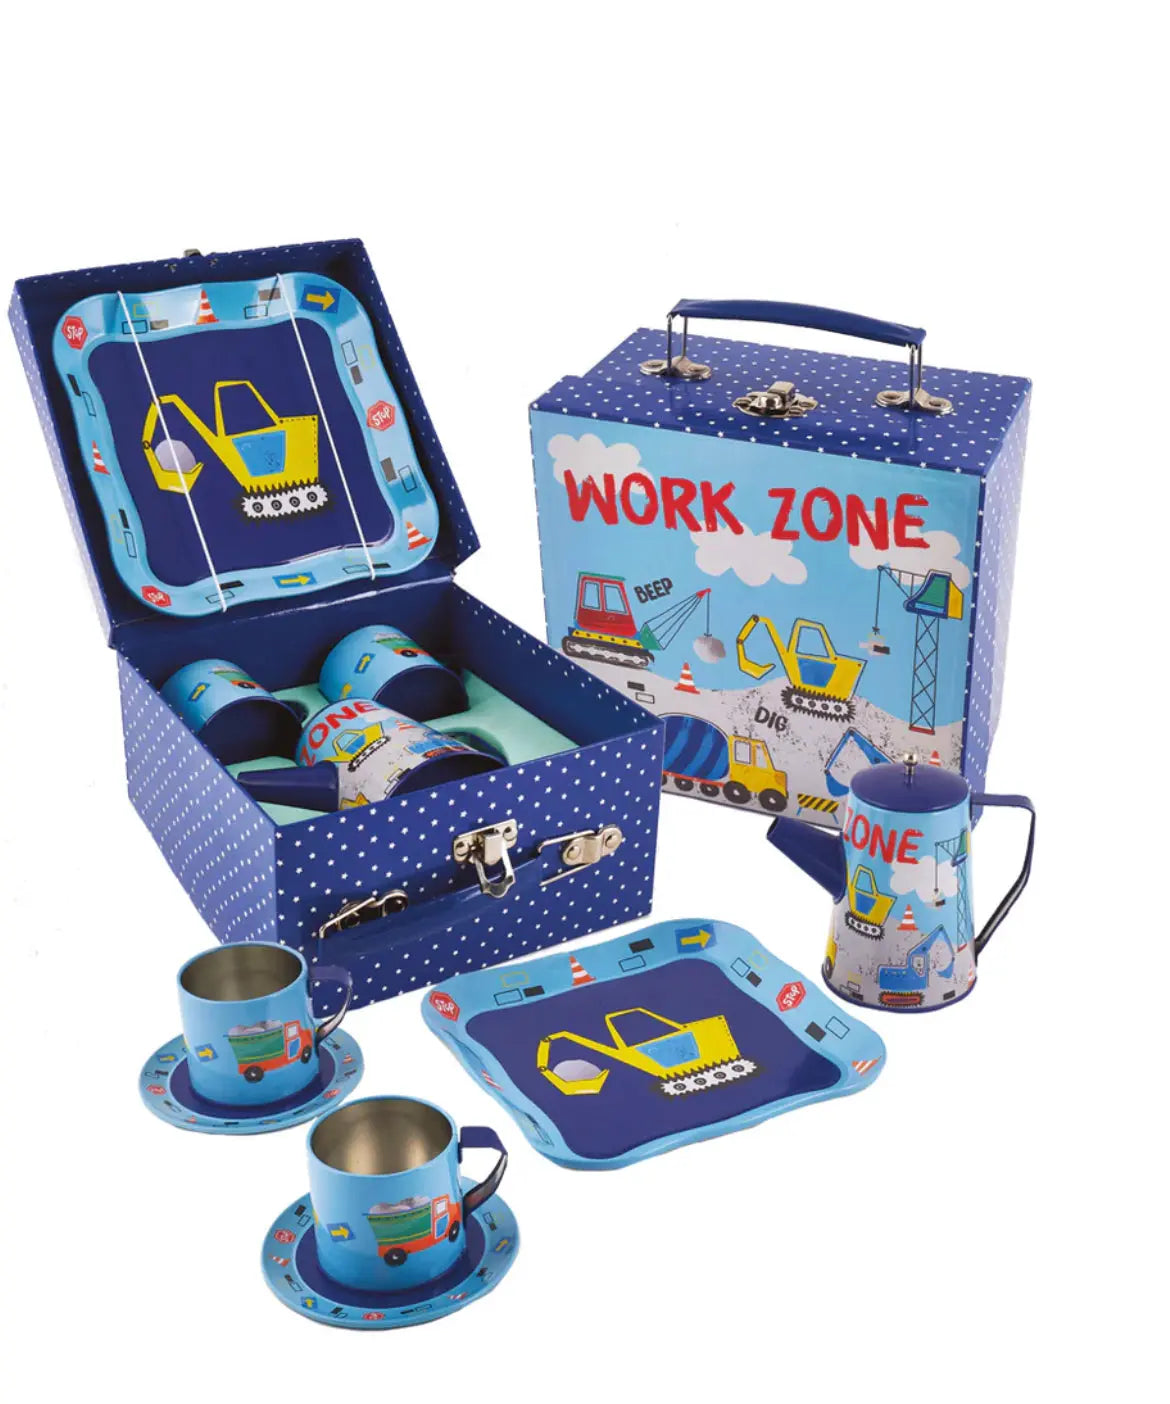 Toy Coffee Set for Pretend Play - Alder & Alouette